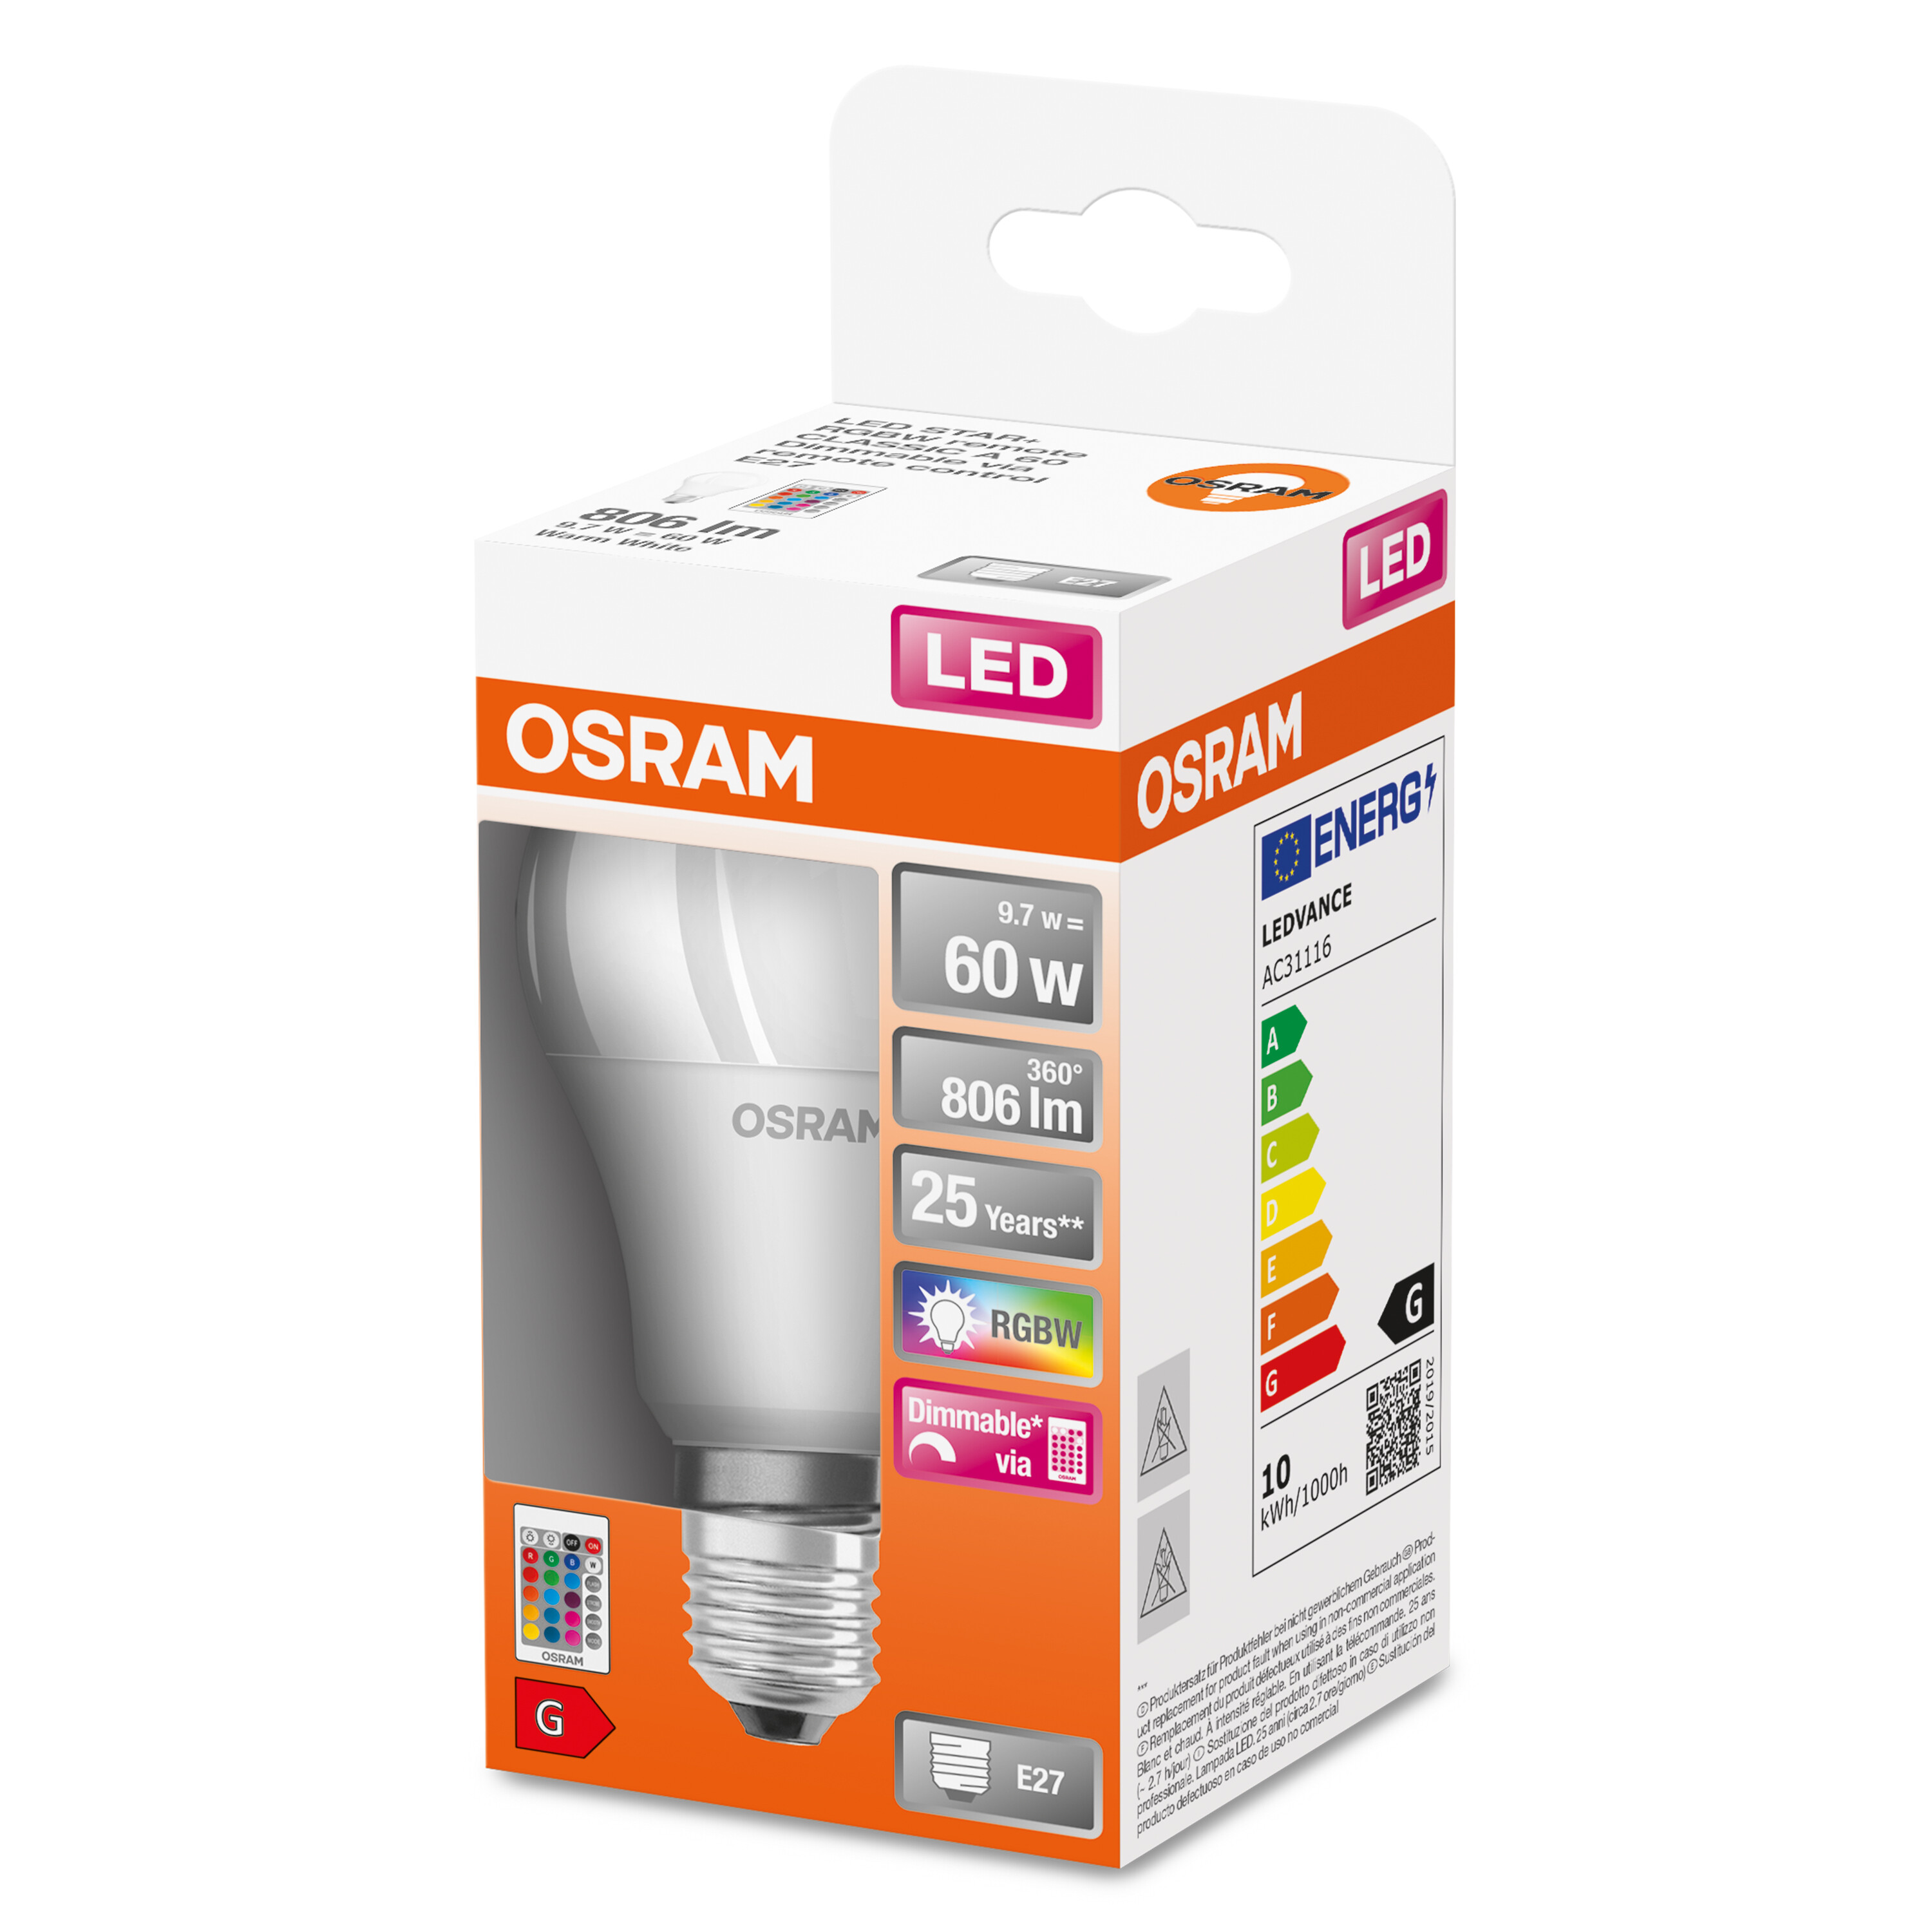 OSRAM  LED Retrofit with control remote Warmweiß lamps RGBW LED Lampe